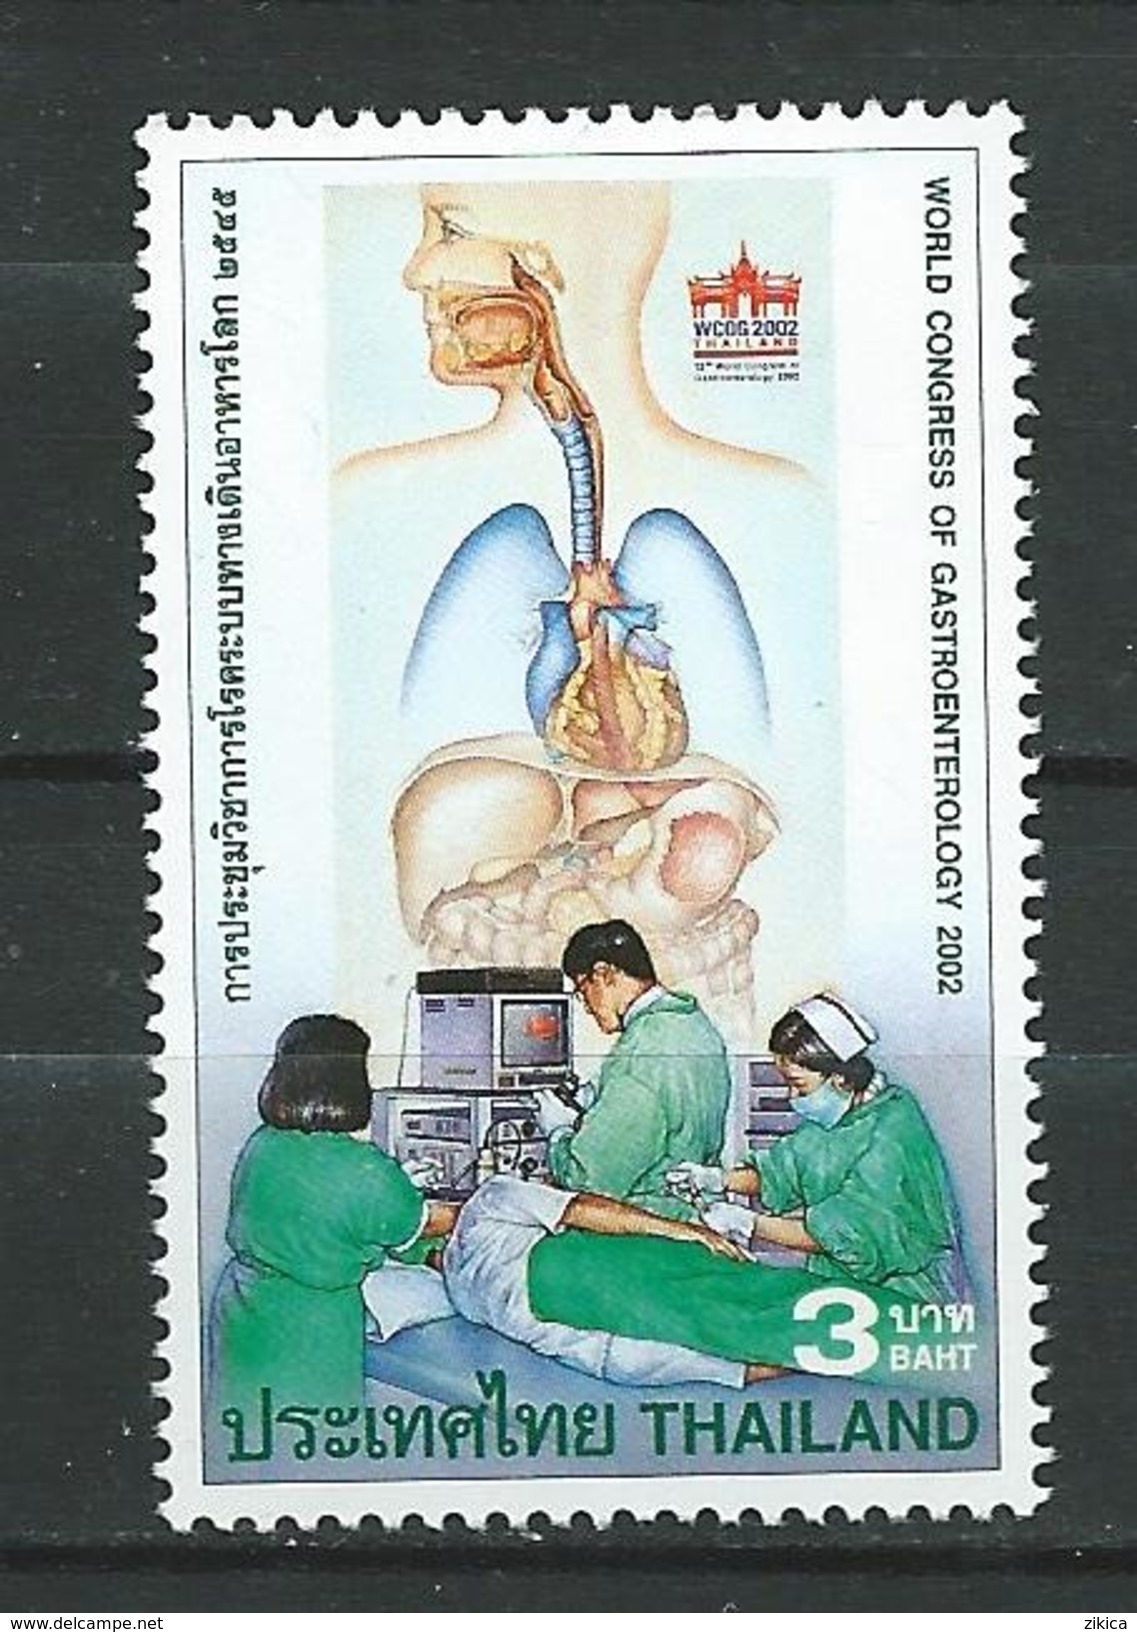 Thailand 2002 The 12th World Congress Of Gastroenterology, Thailand.medicine.MNH - Tailandia